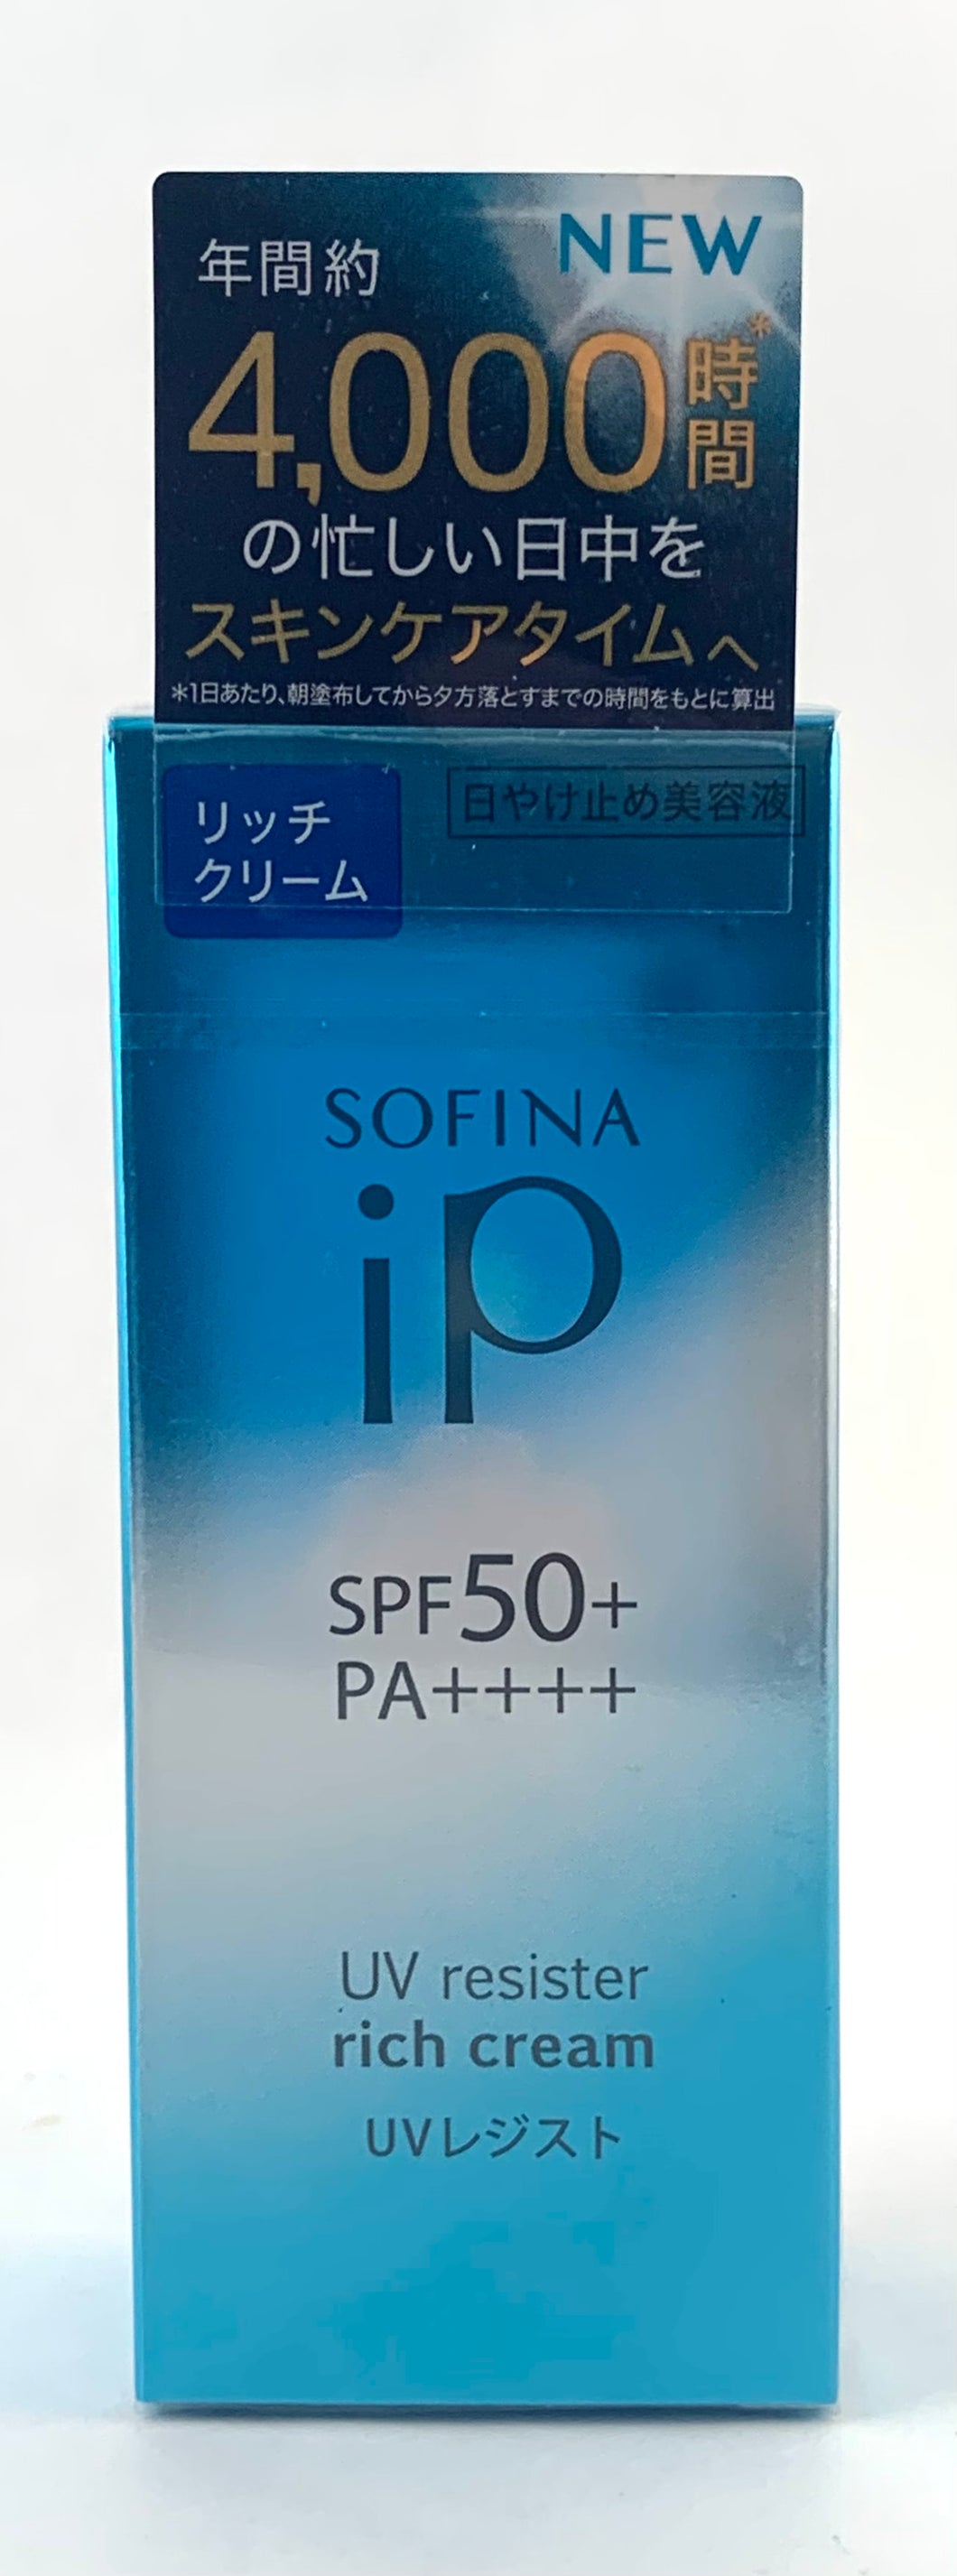 Sofina iP UV Resister Smooth Milk/Rich Cream SPF50+ PA++++ 30ml,30g.